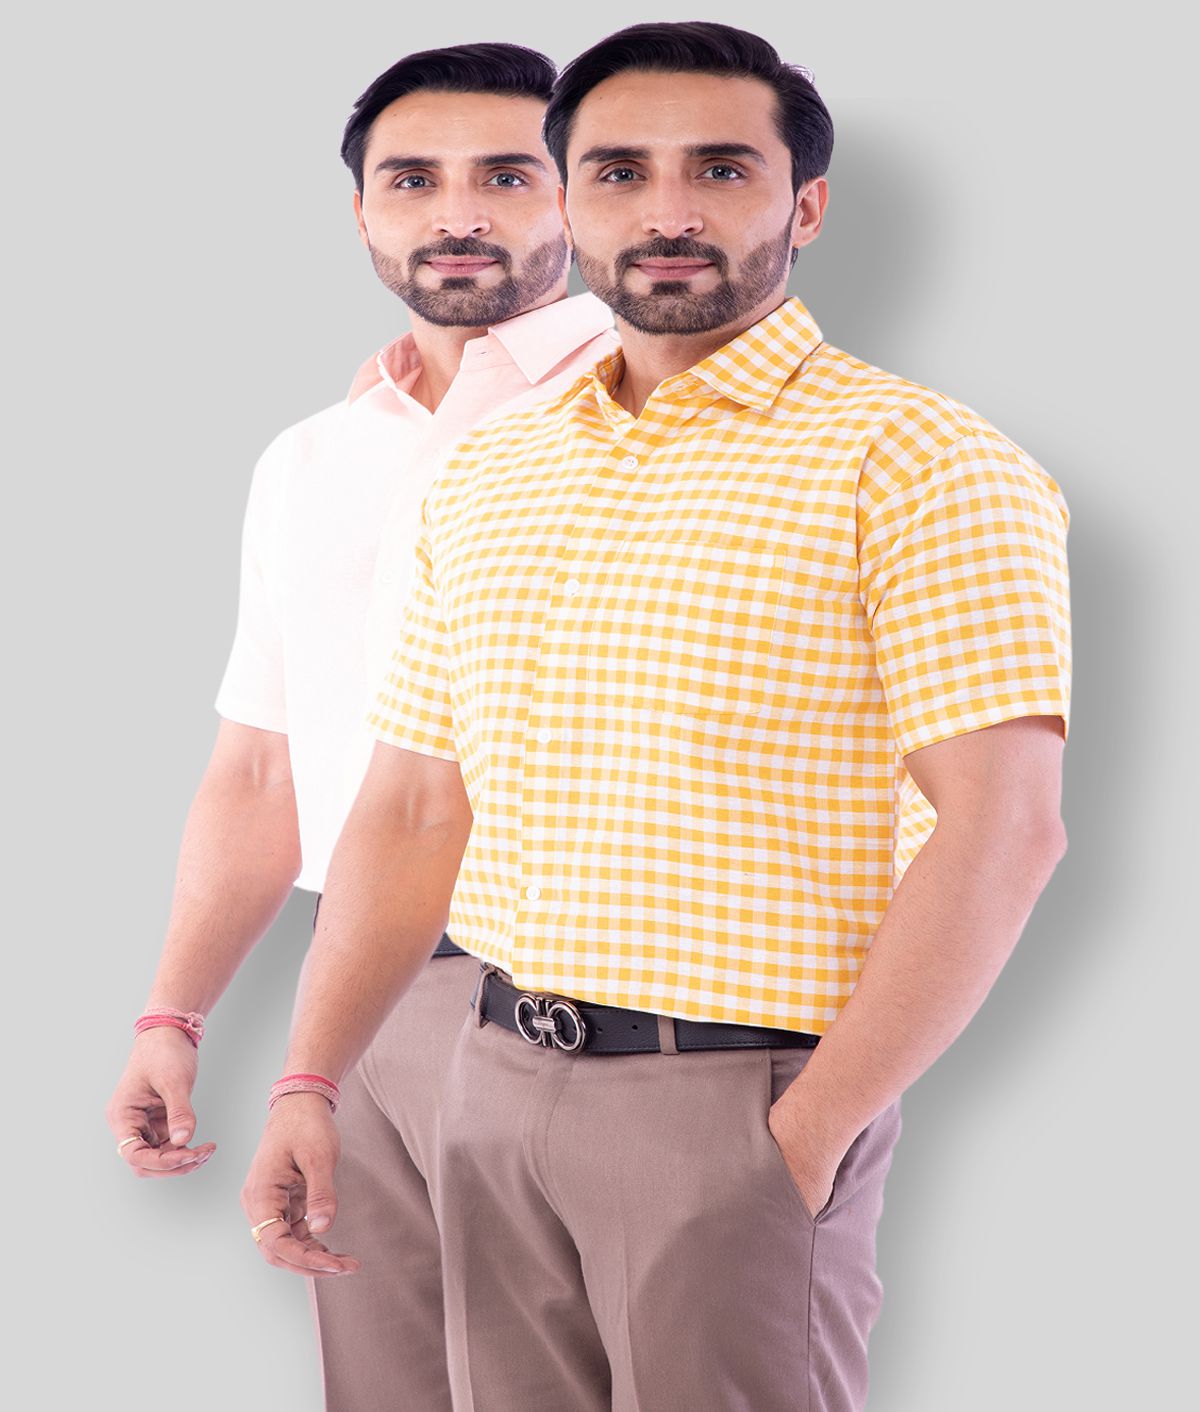     			DESHBANDHU DBK - Multicolor Cotton Regular Fit Men's Casual Shirt (Pack of 4 )